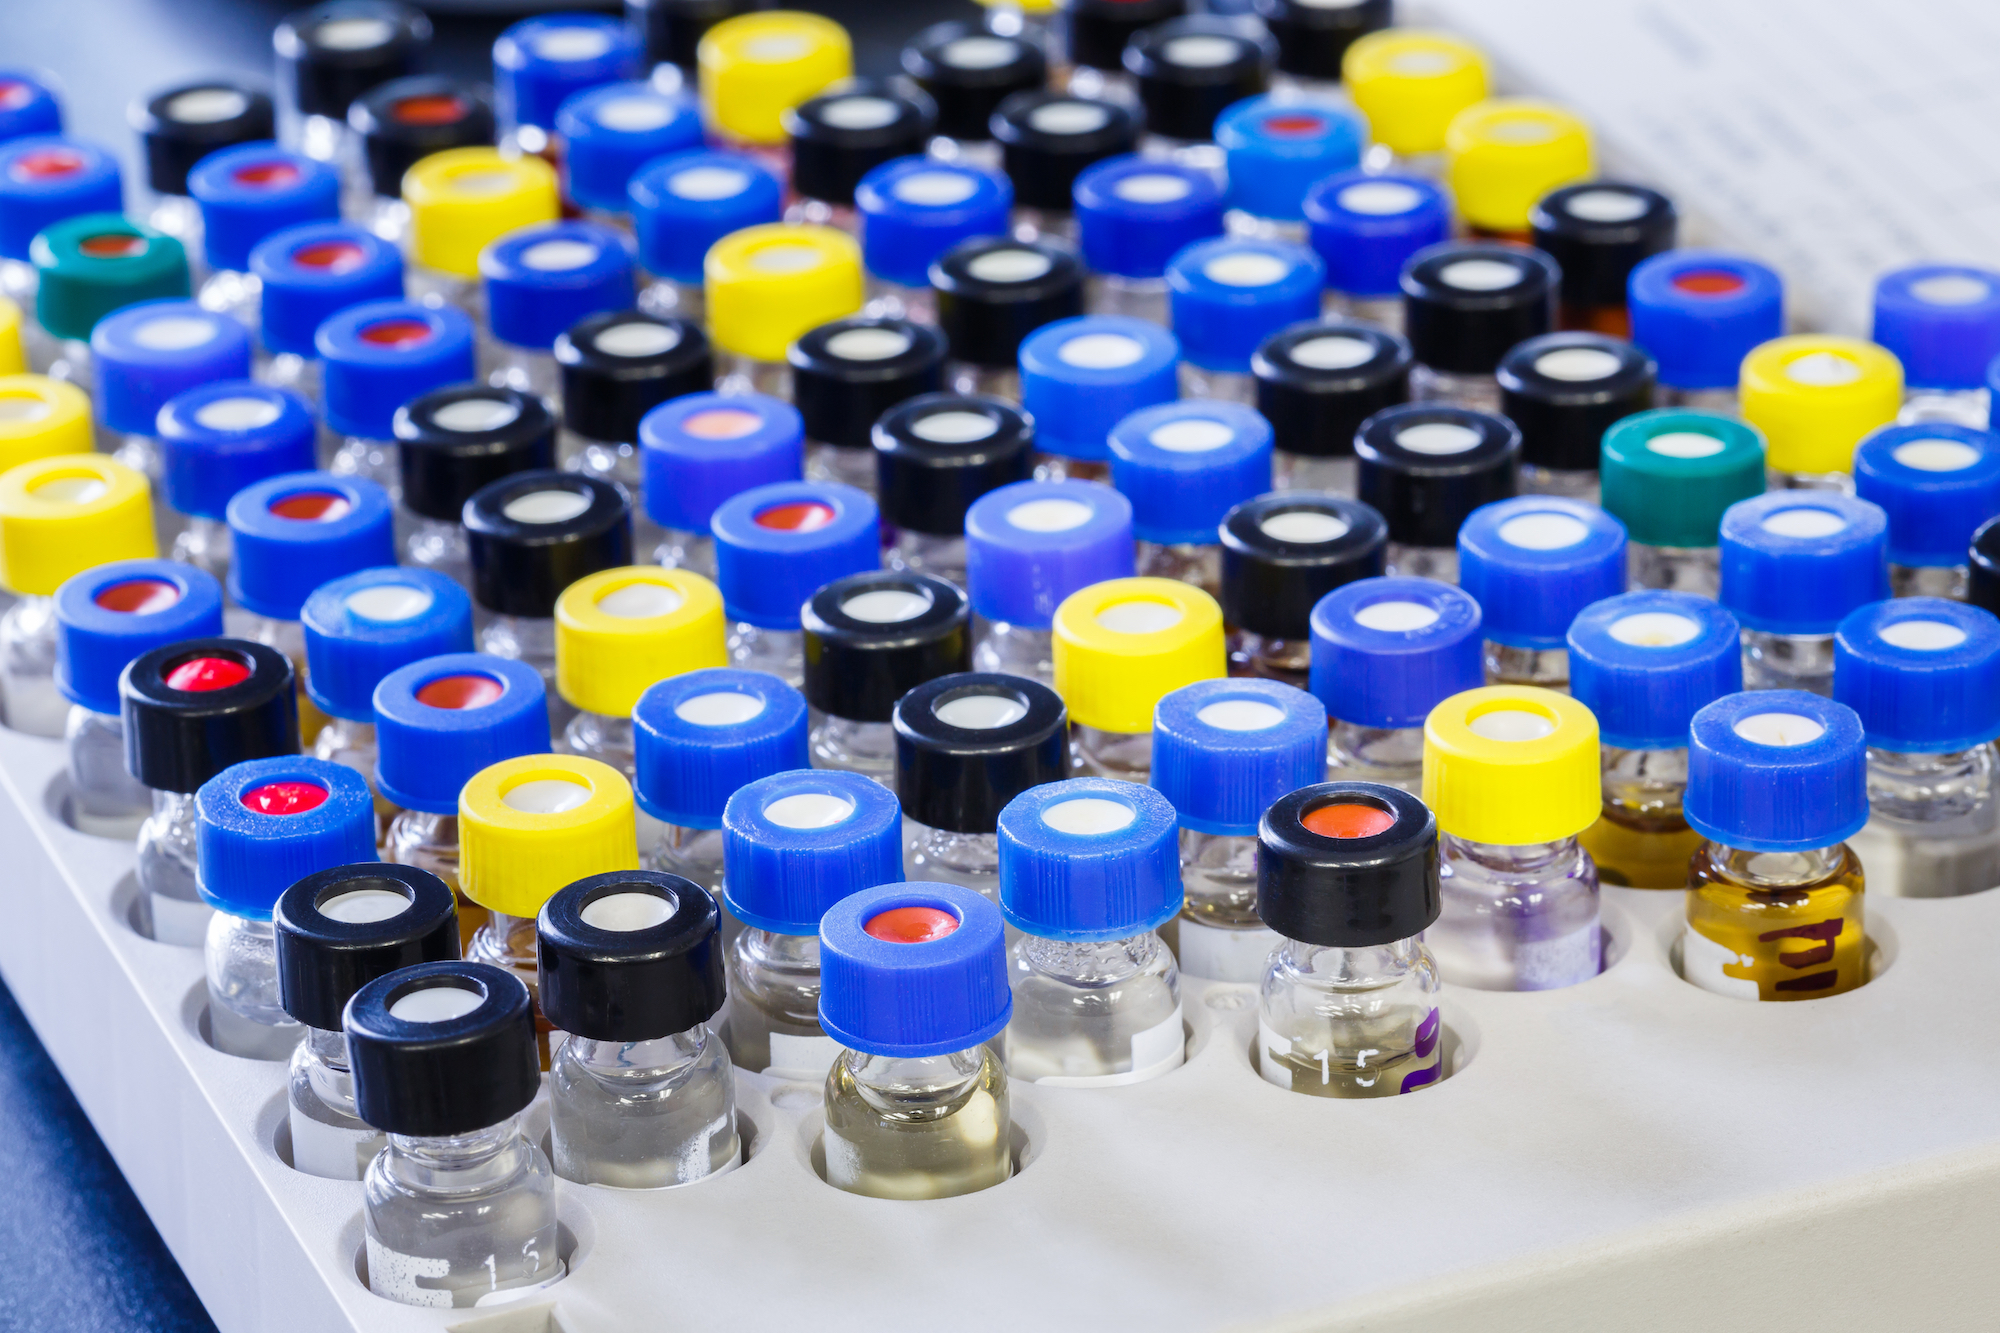 Photo of vials with inserts and crimp septum caps in plastic rack for liquid analysis